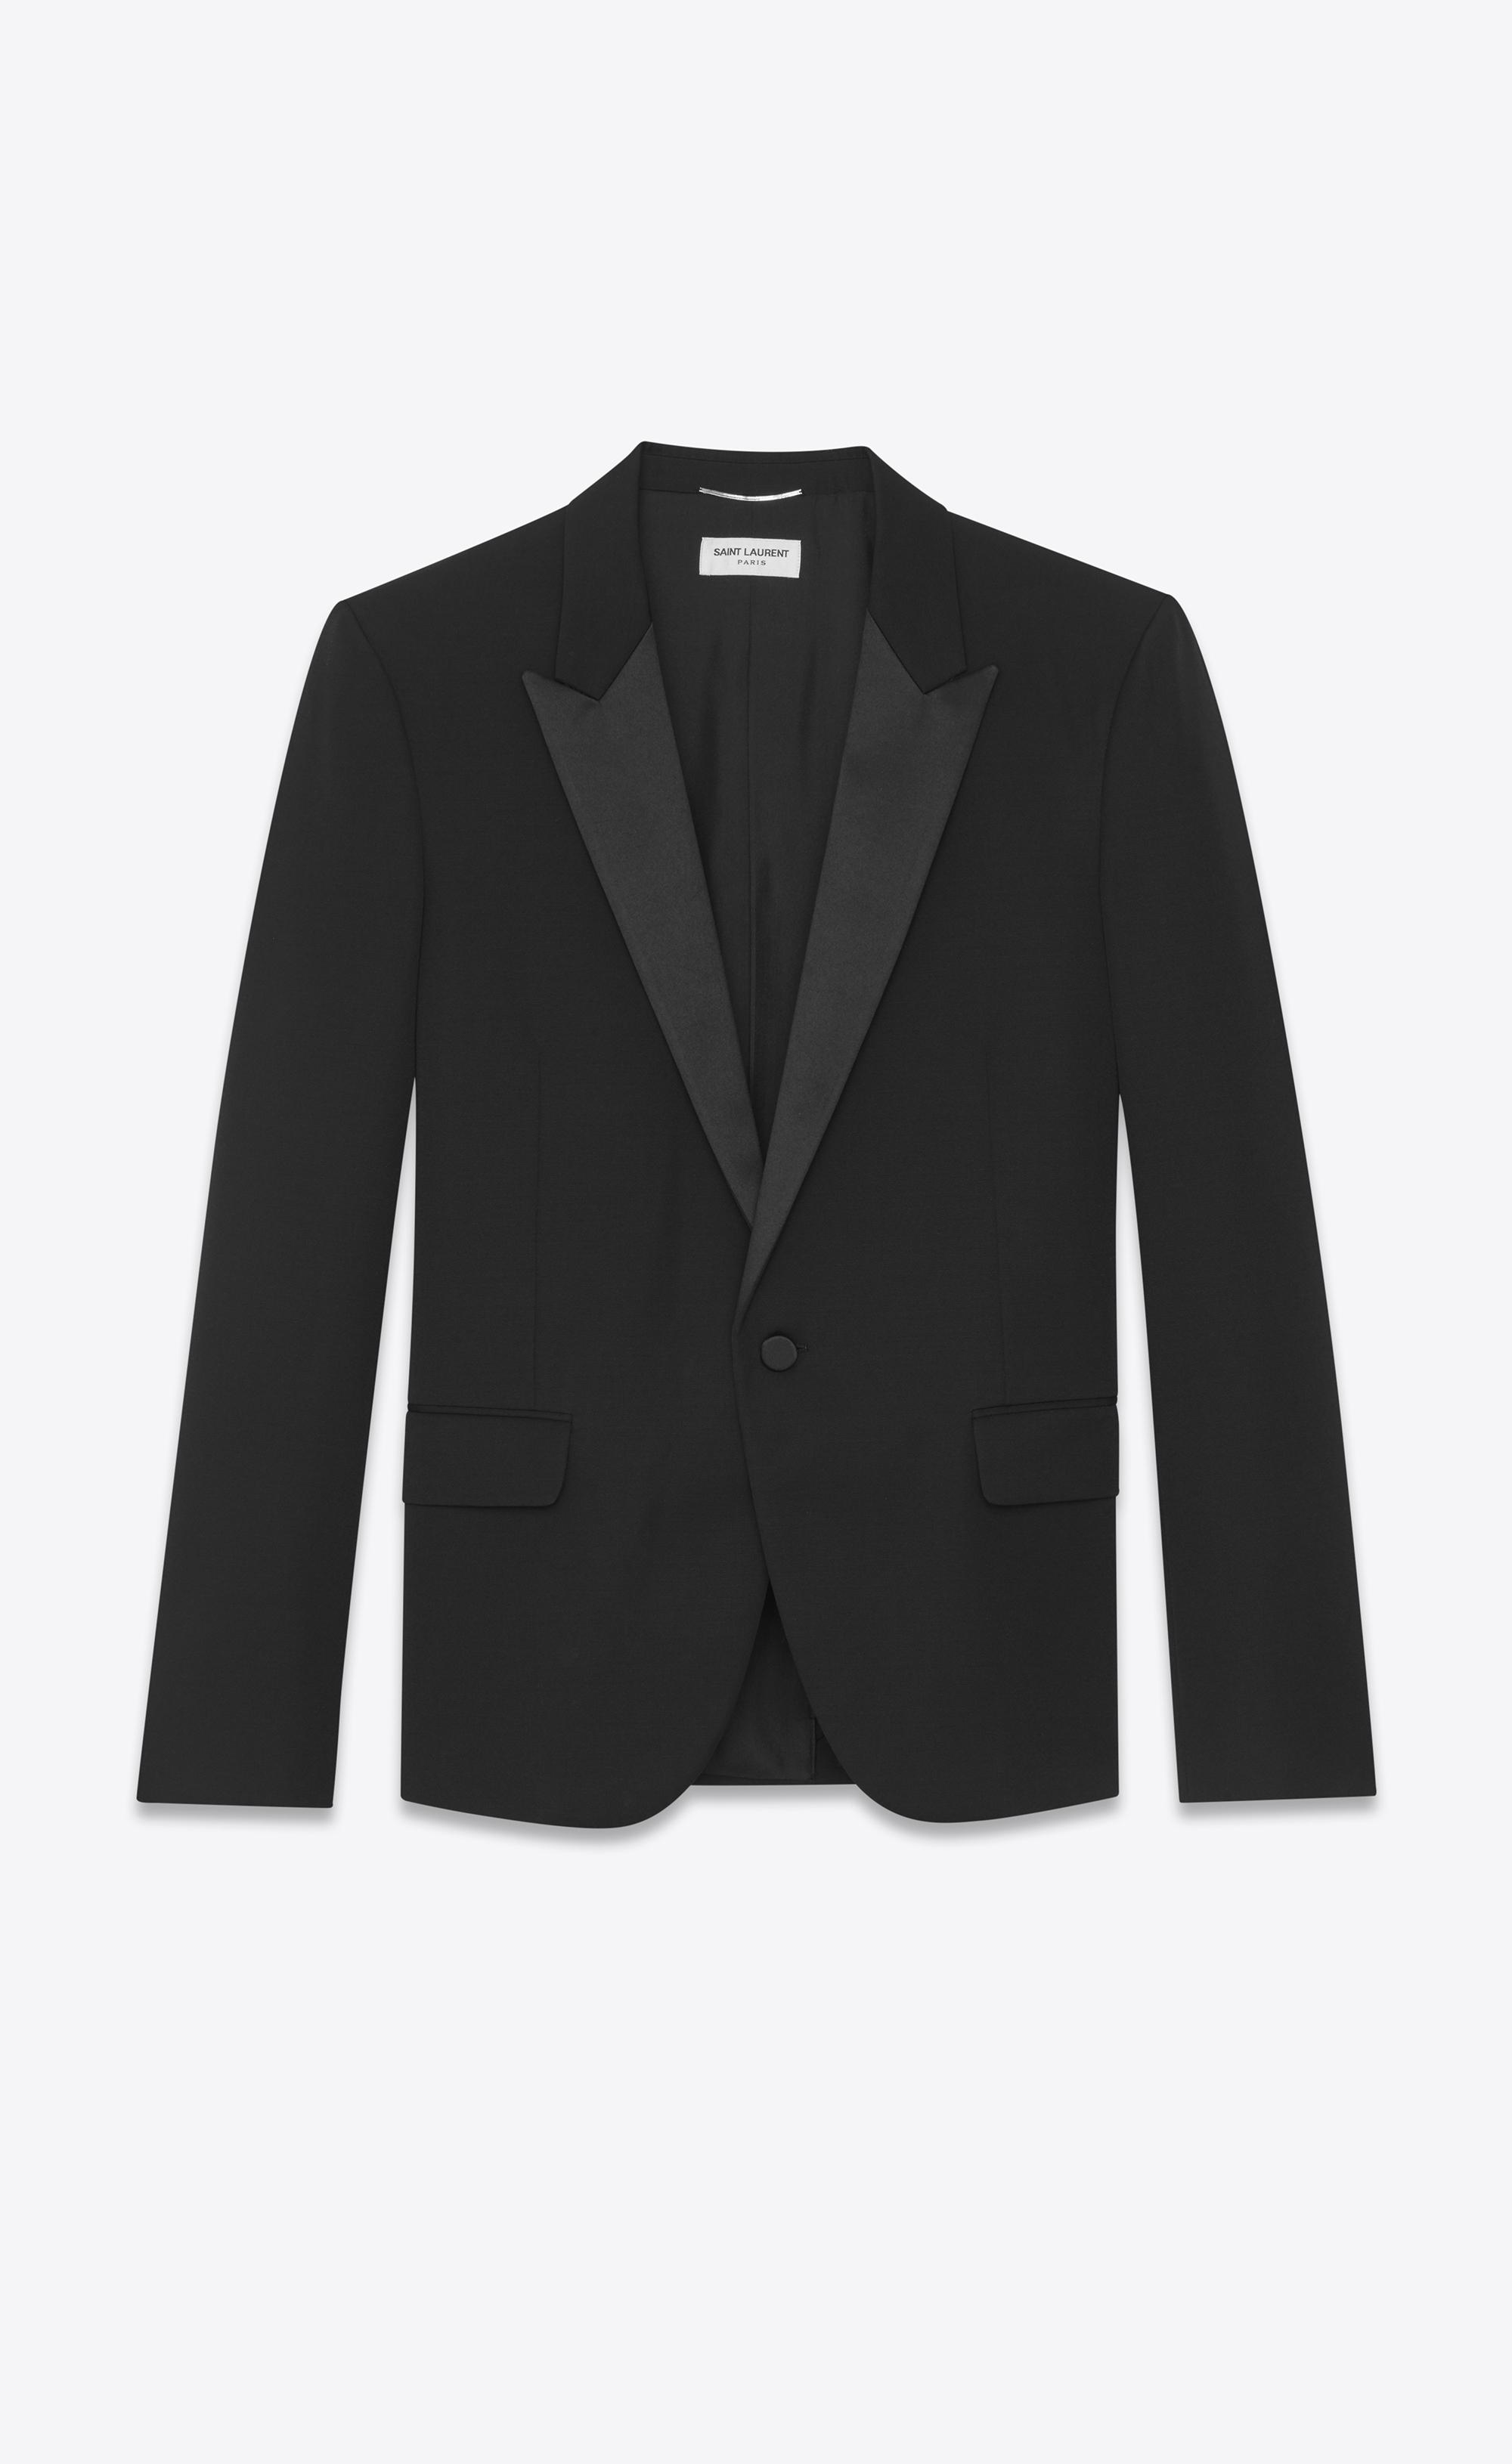 Saint Laurent Satin Peaked Lapel Tuxedo Jacket In Grain De Poudre in ...